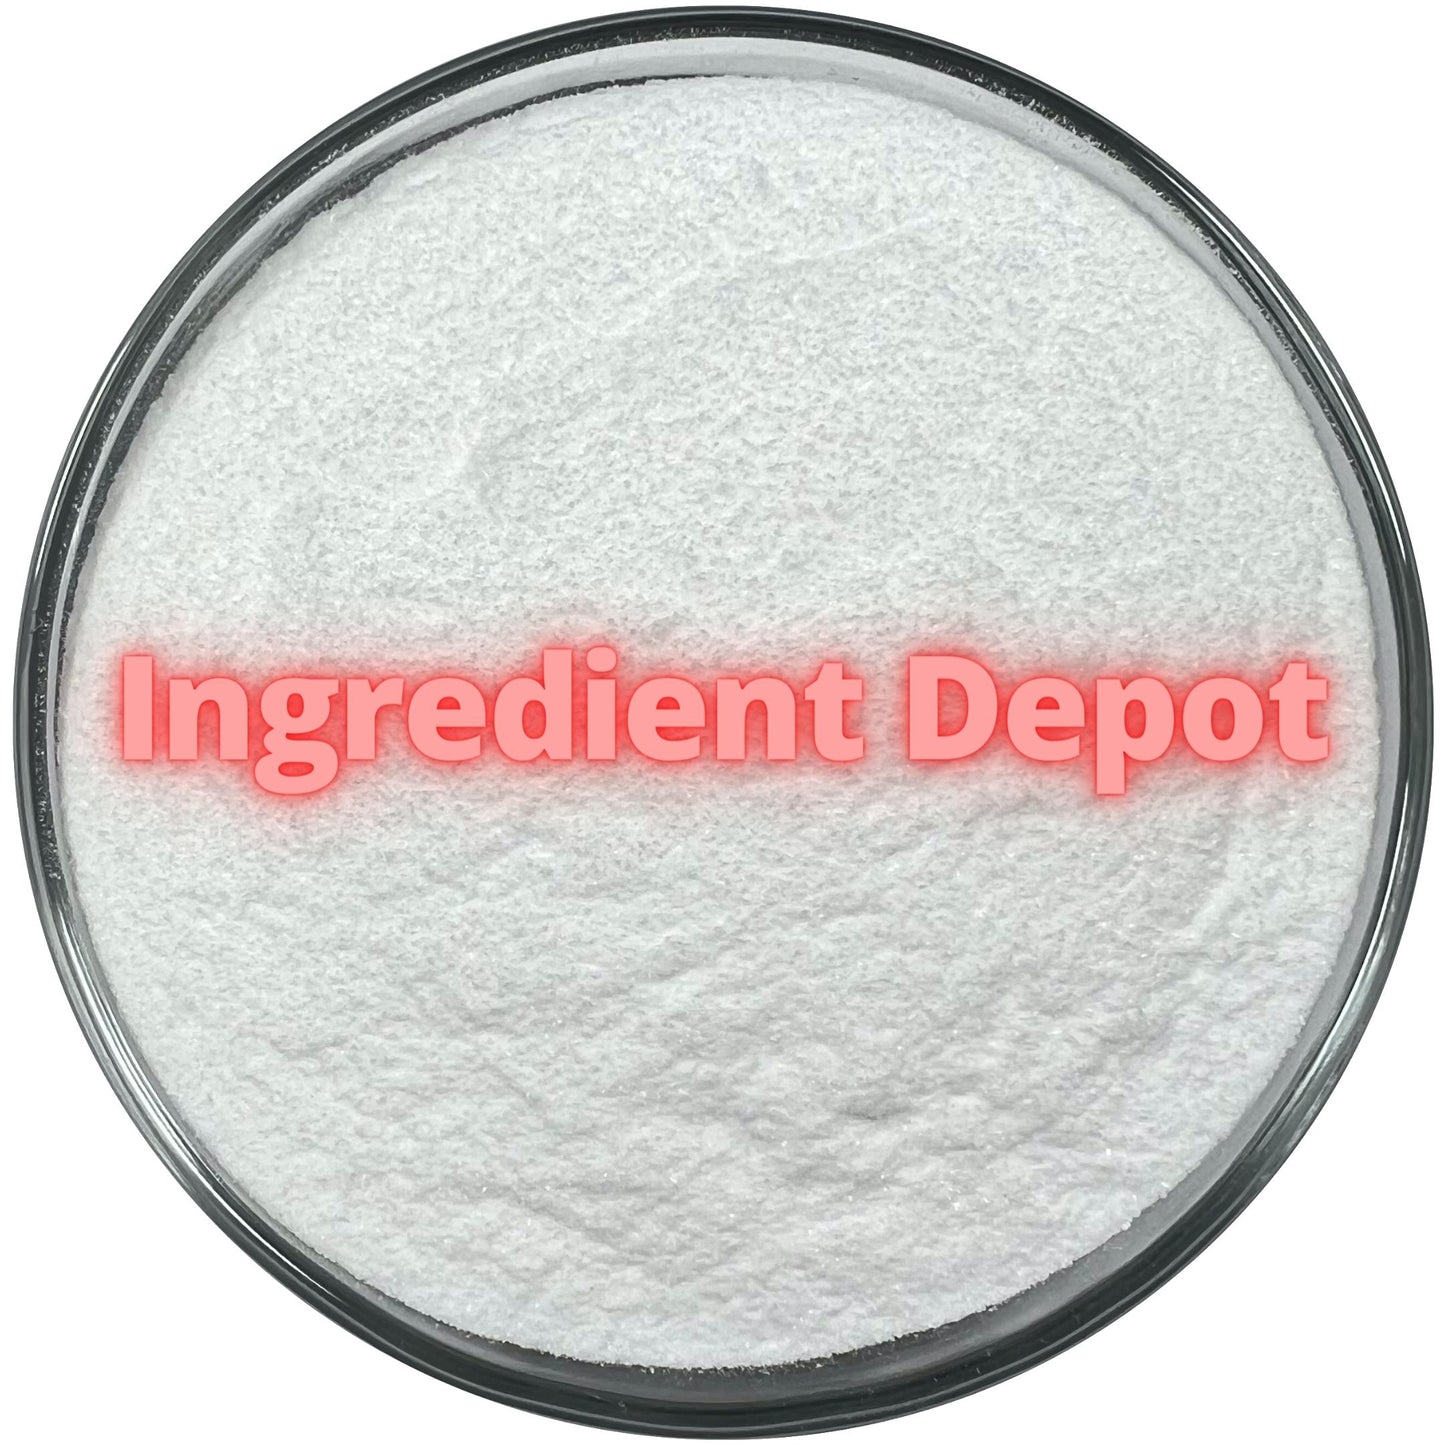 Dextrose Monohydrate, Food Grade 1 kg - IngredientDepot.com